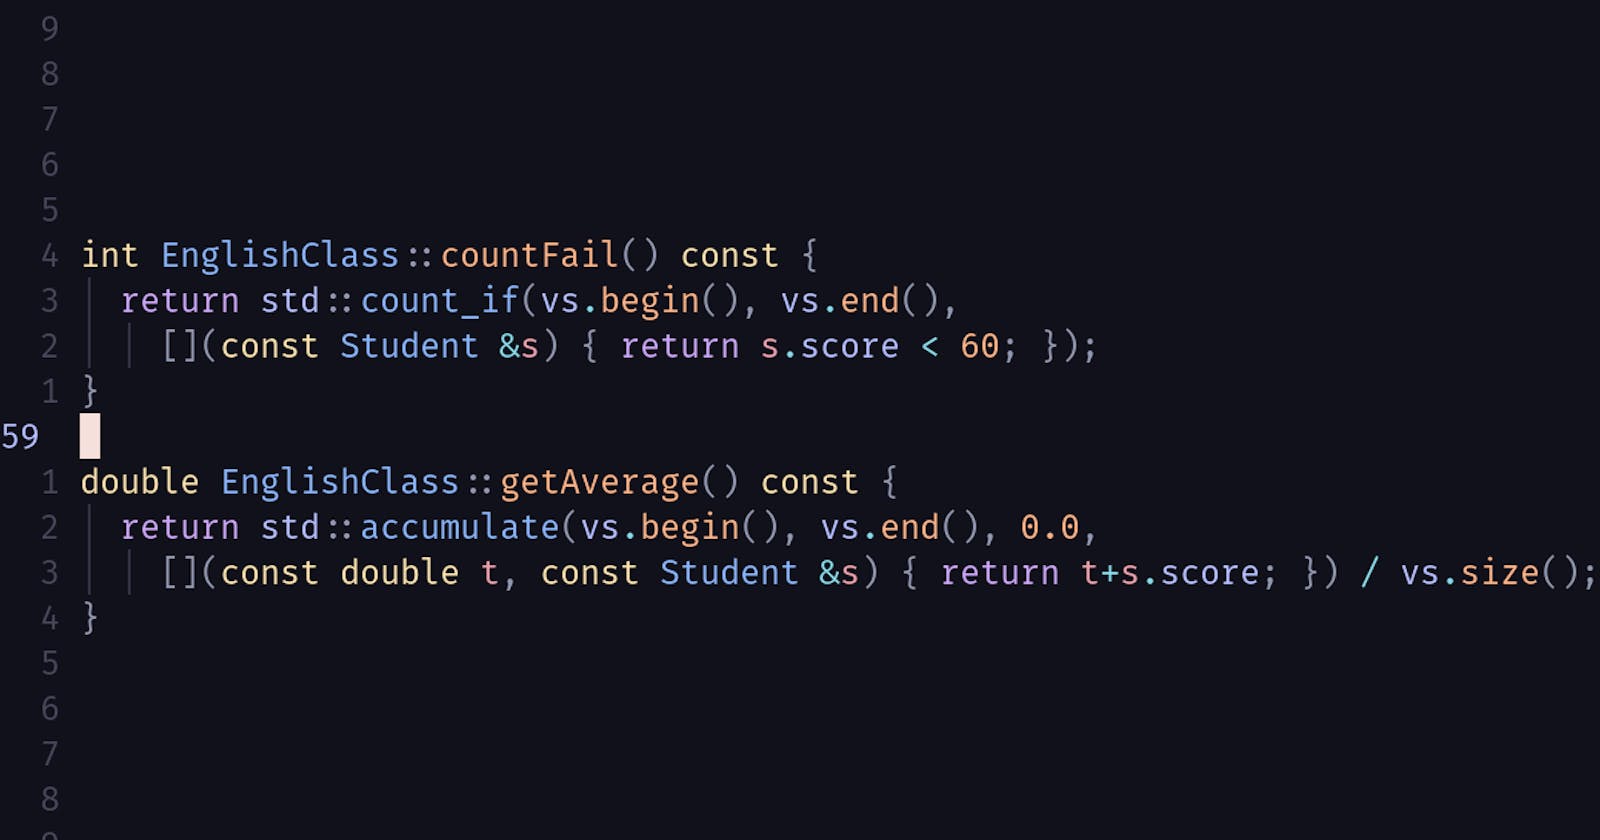 The beauty of C++ STL algorithm and lambda